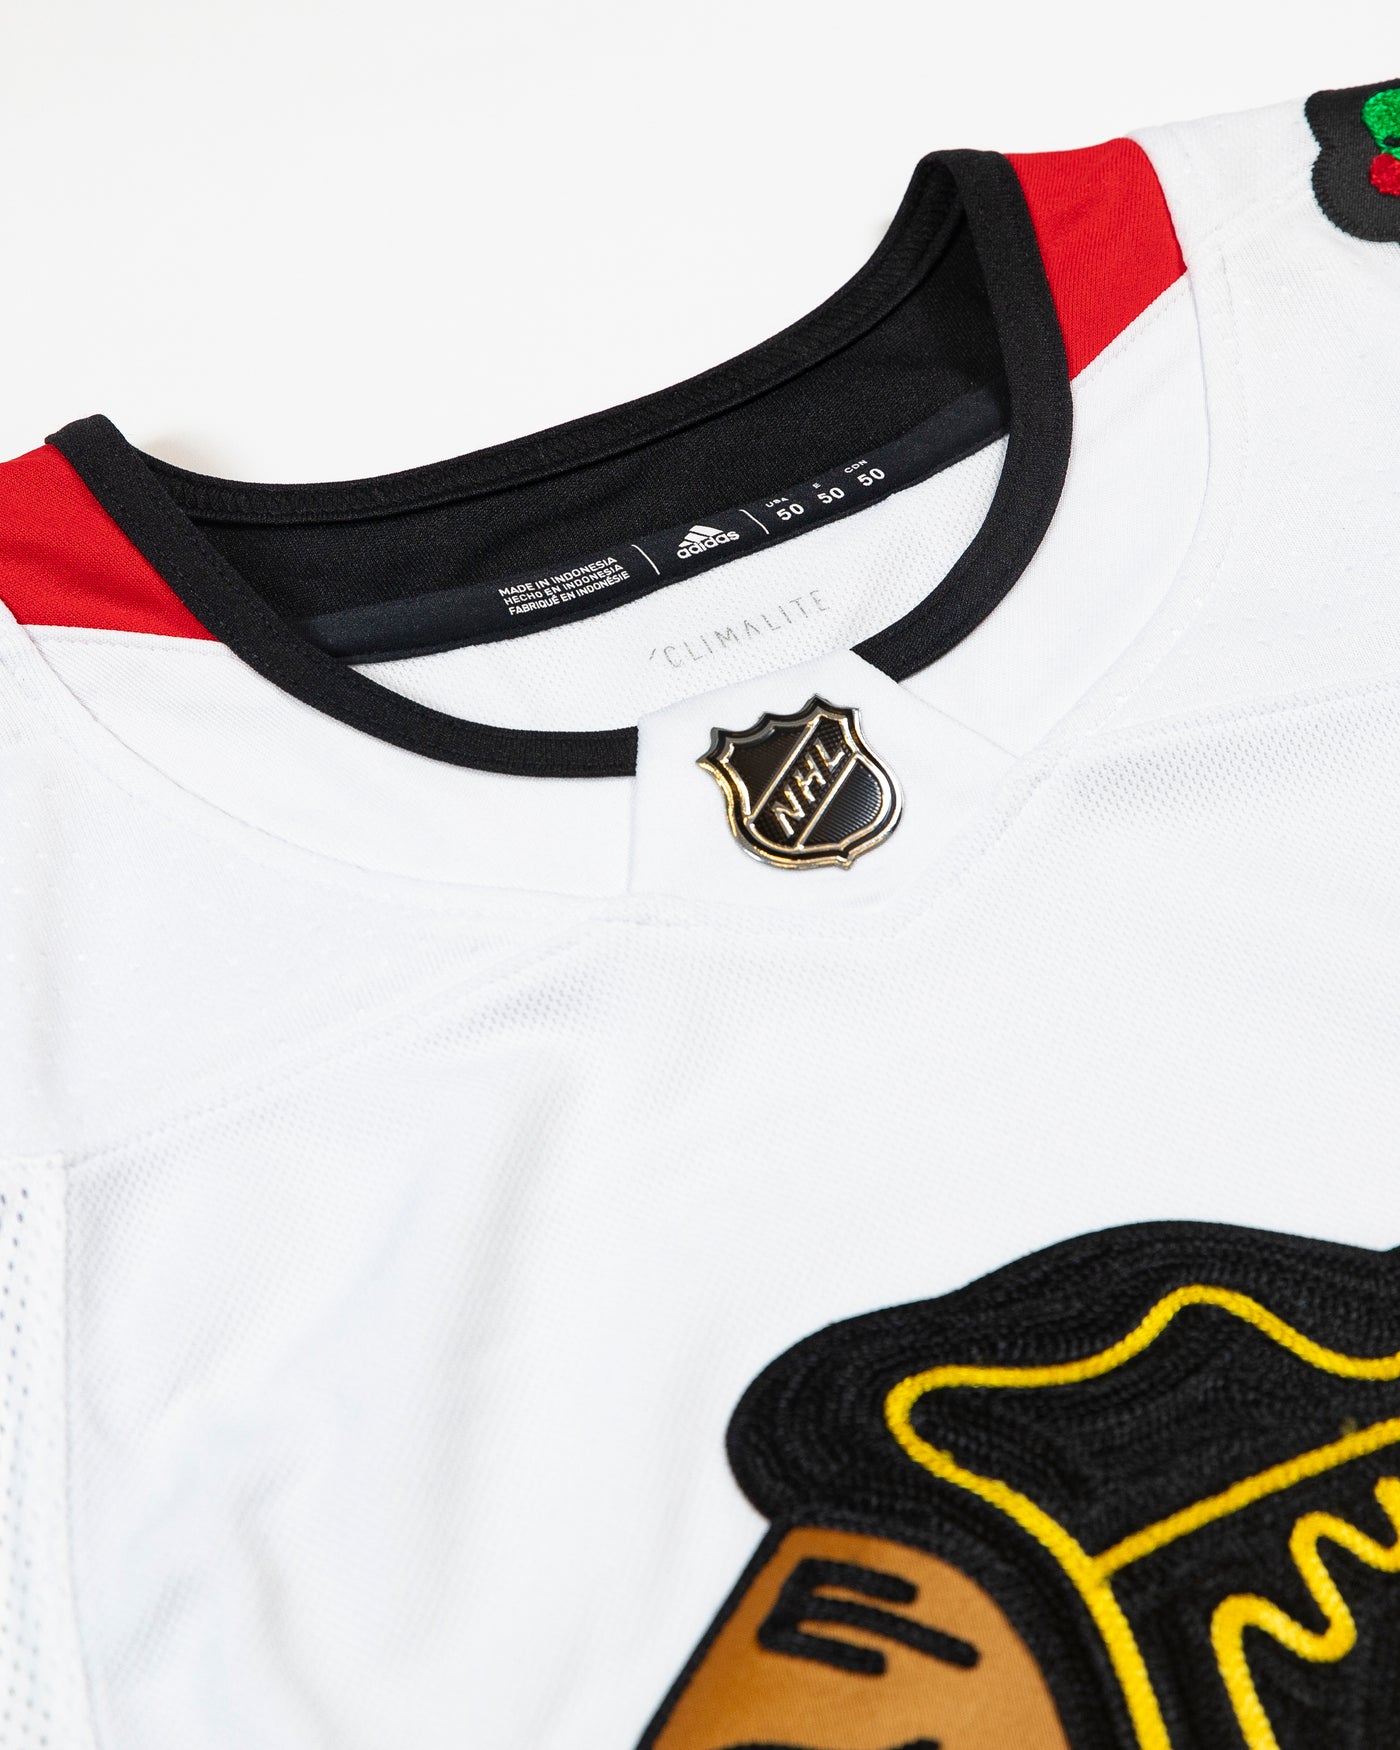 Blackhawks Reverse Retro Authentic Jersey by Adidas